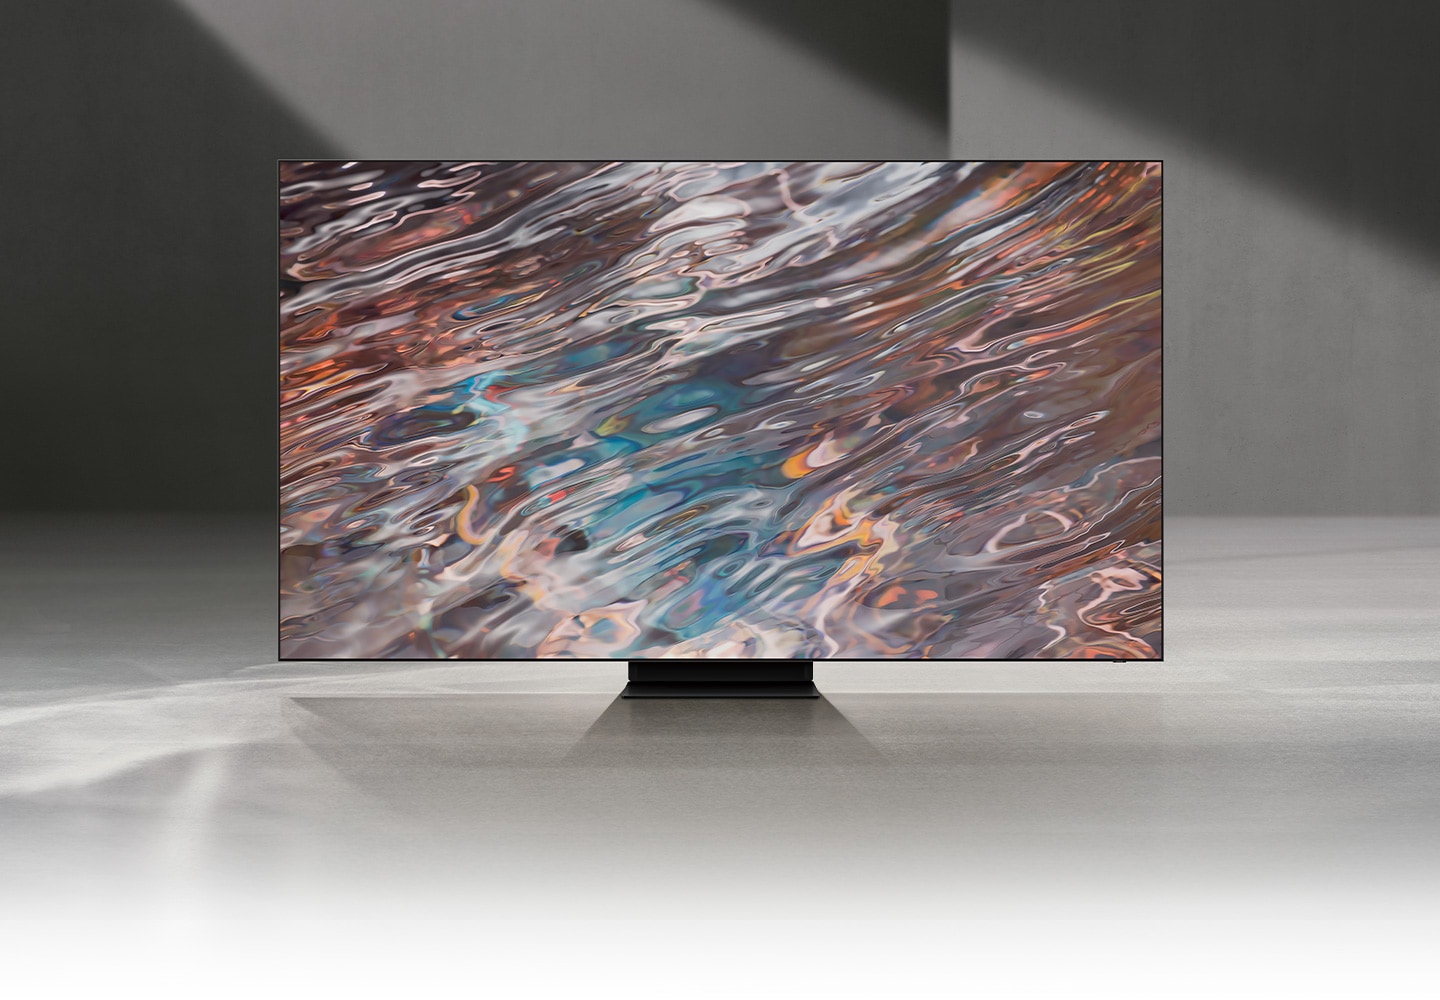 Samsung 65″ NEO QLED  8K  Smart TV  2021